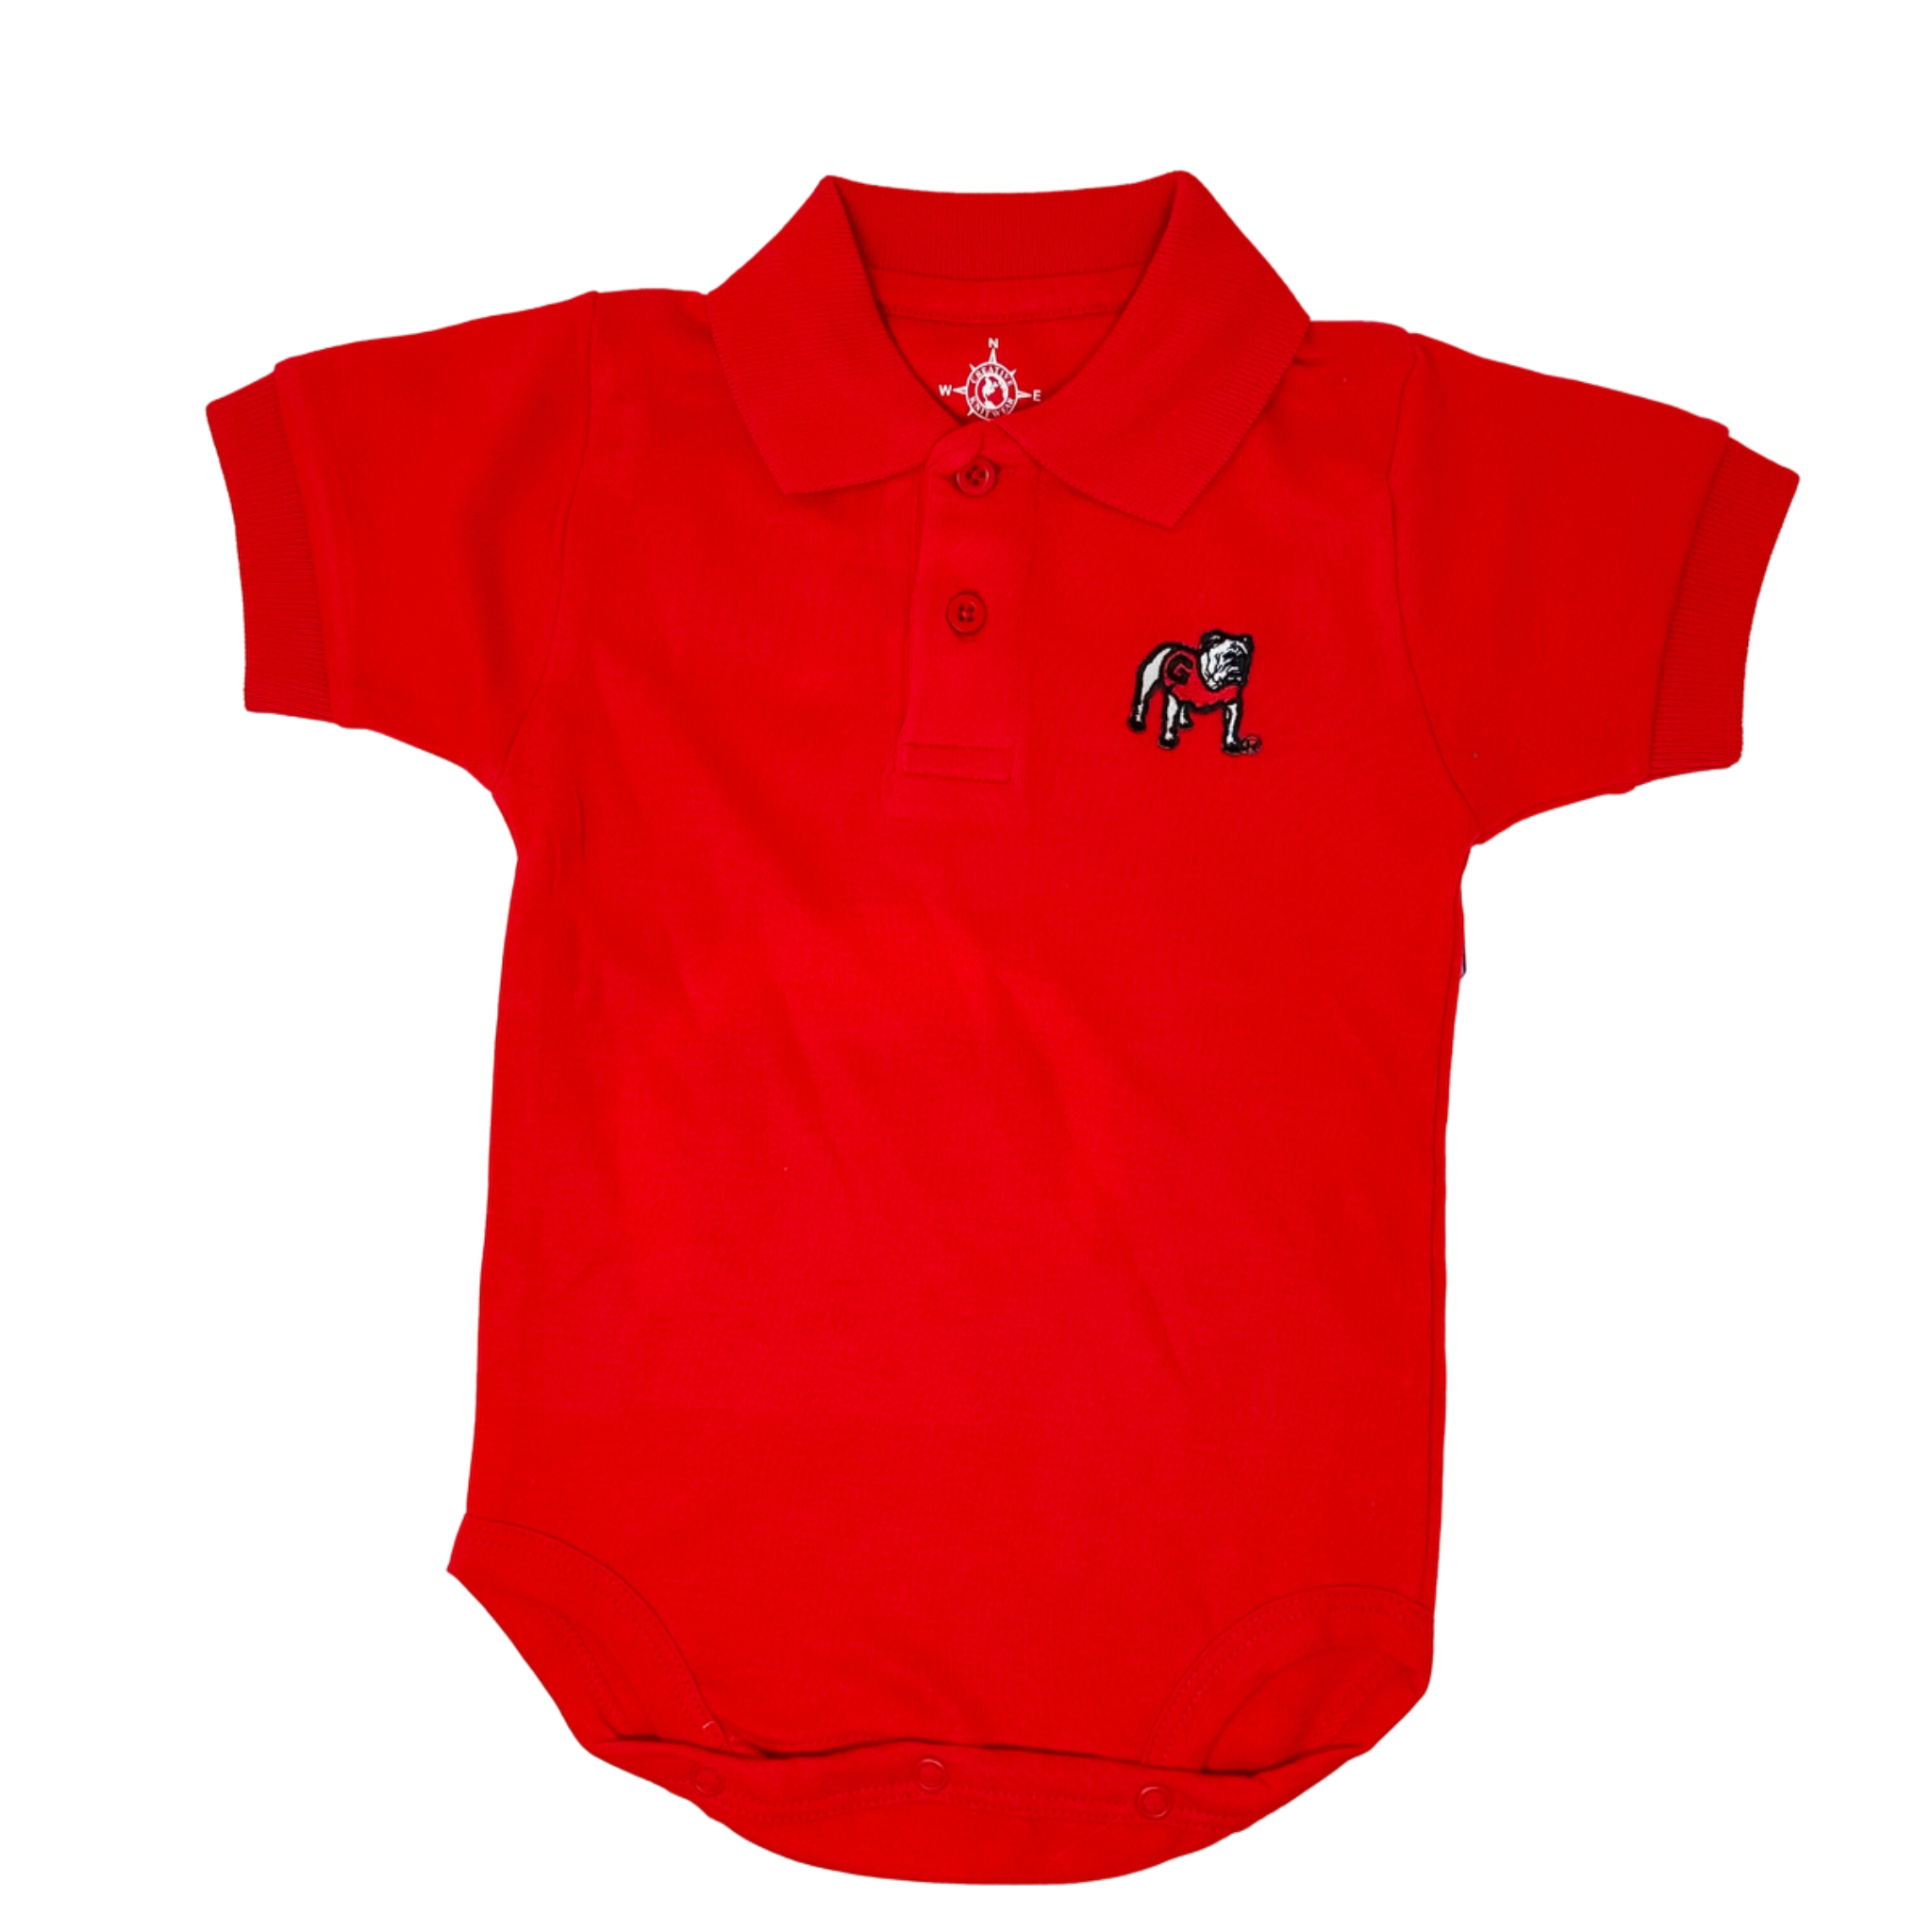 Creative Knitwear Louisville Cardinals Varsity Jacket